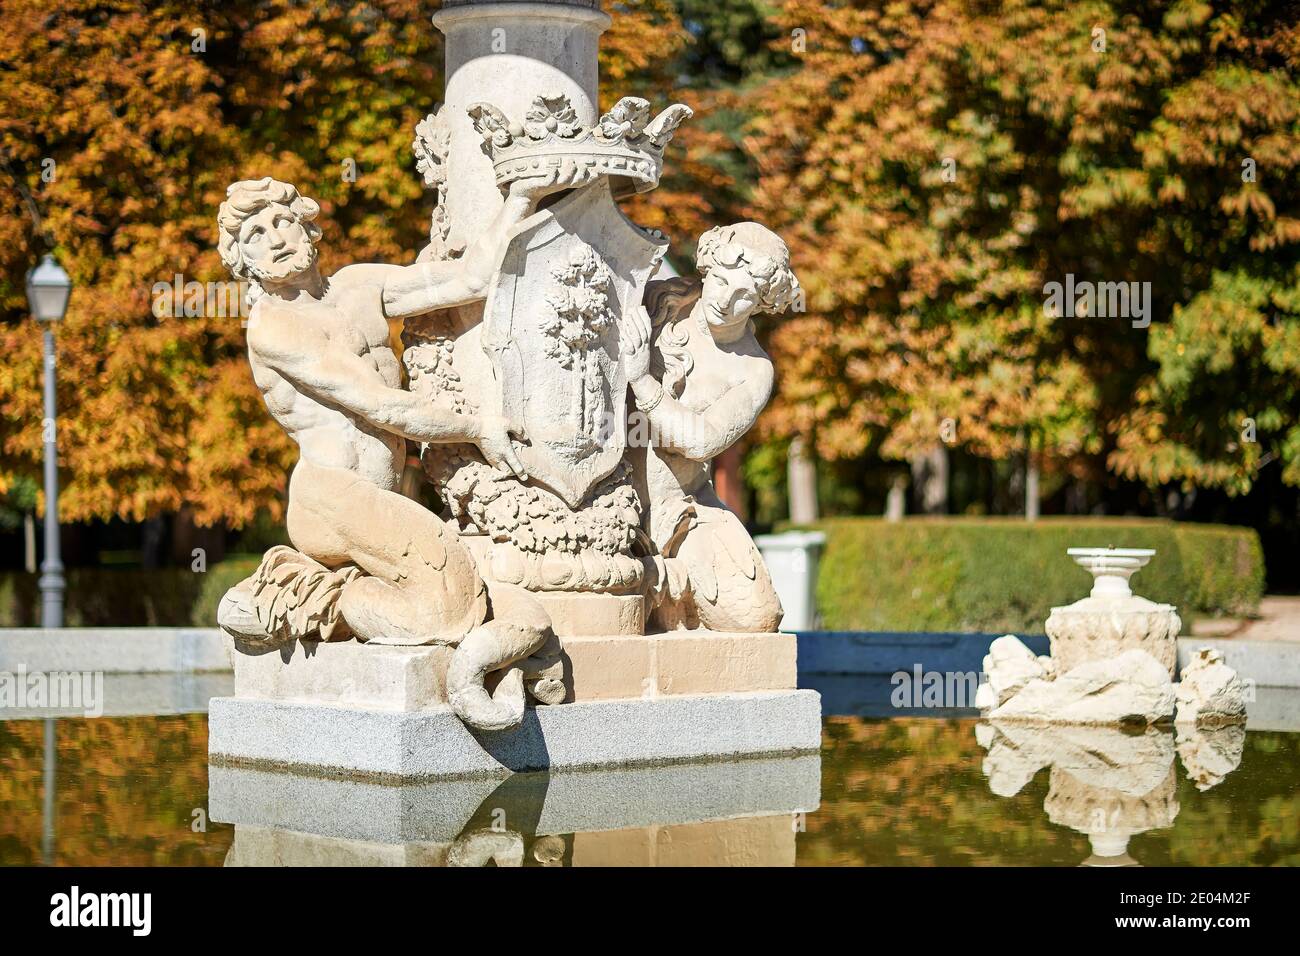 Detail of the sculpture of the artichoke fountain in El Retiro park in Madrid, Spain. Stock Photo